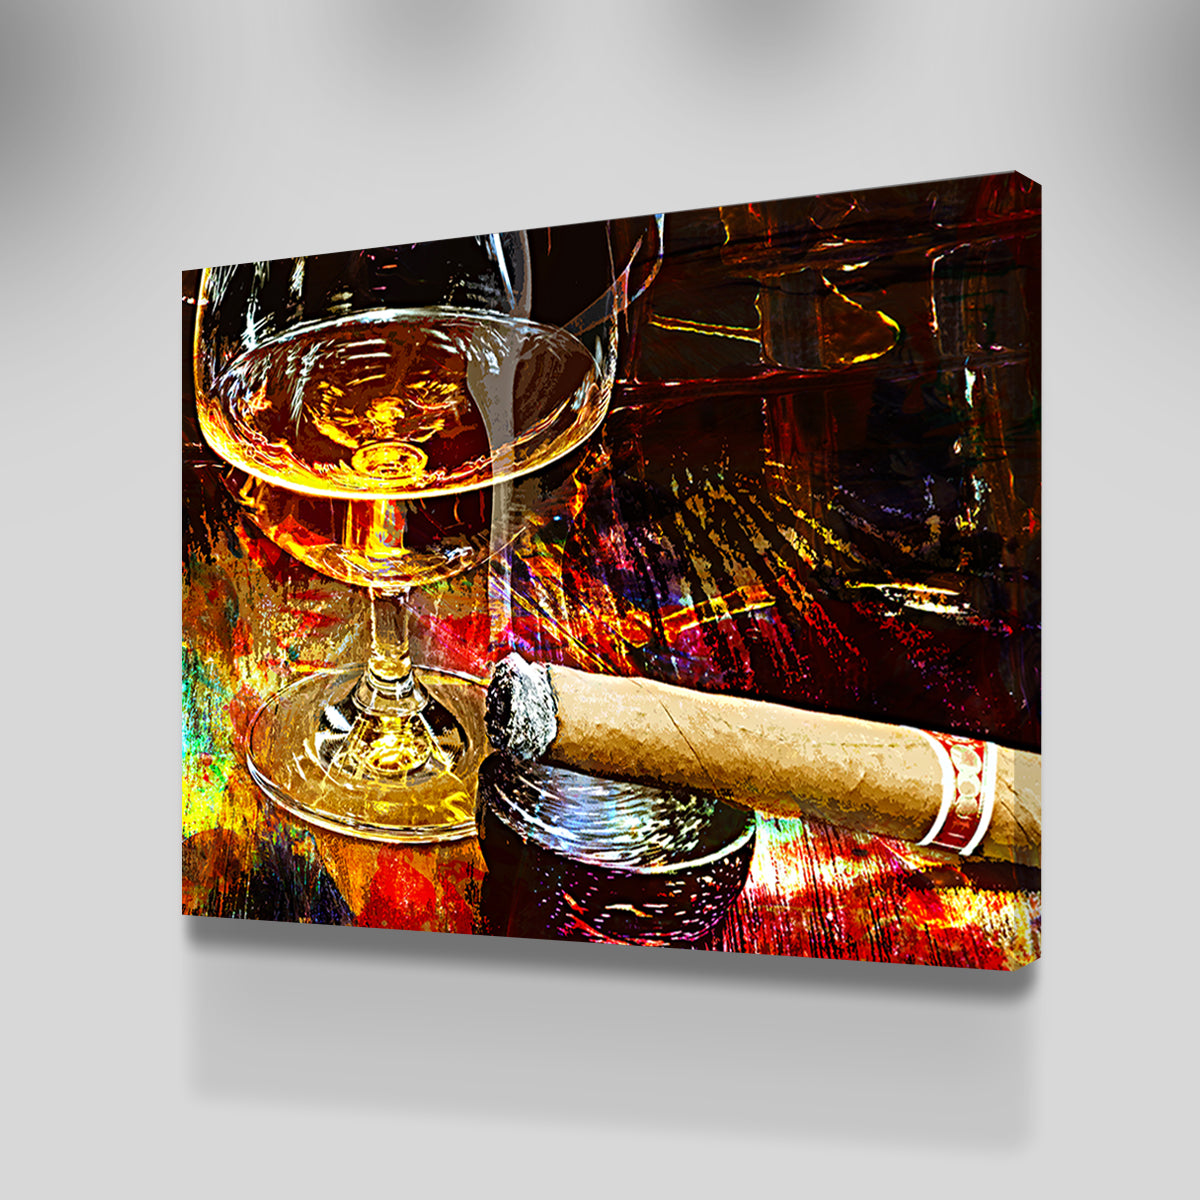 Cigar and Whiskey